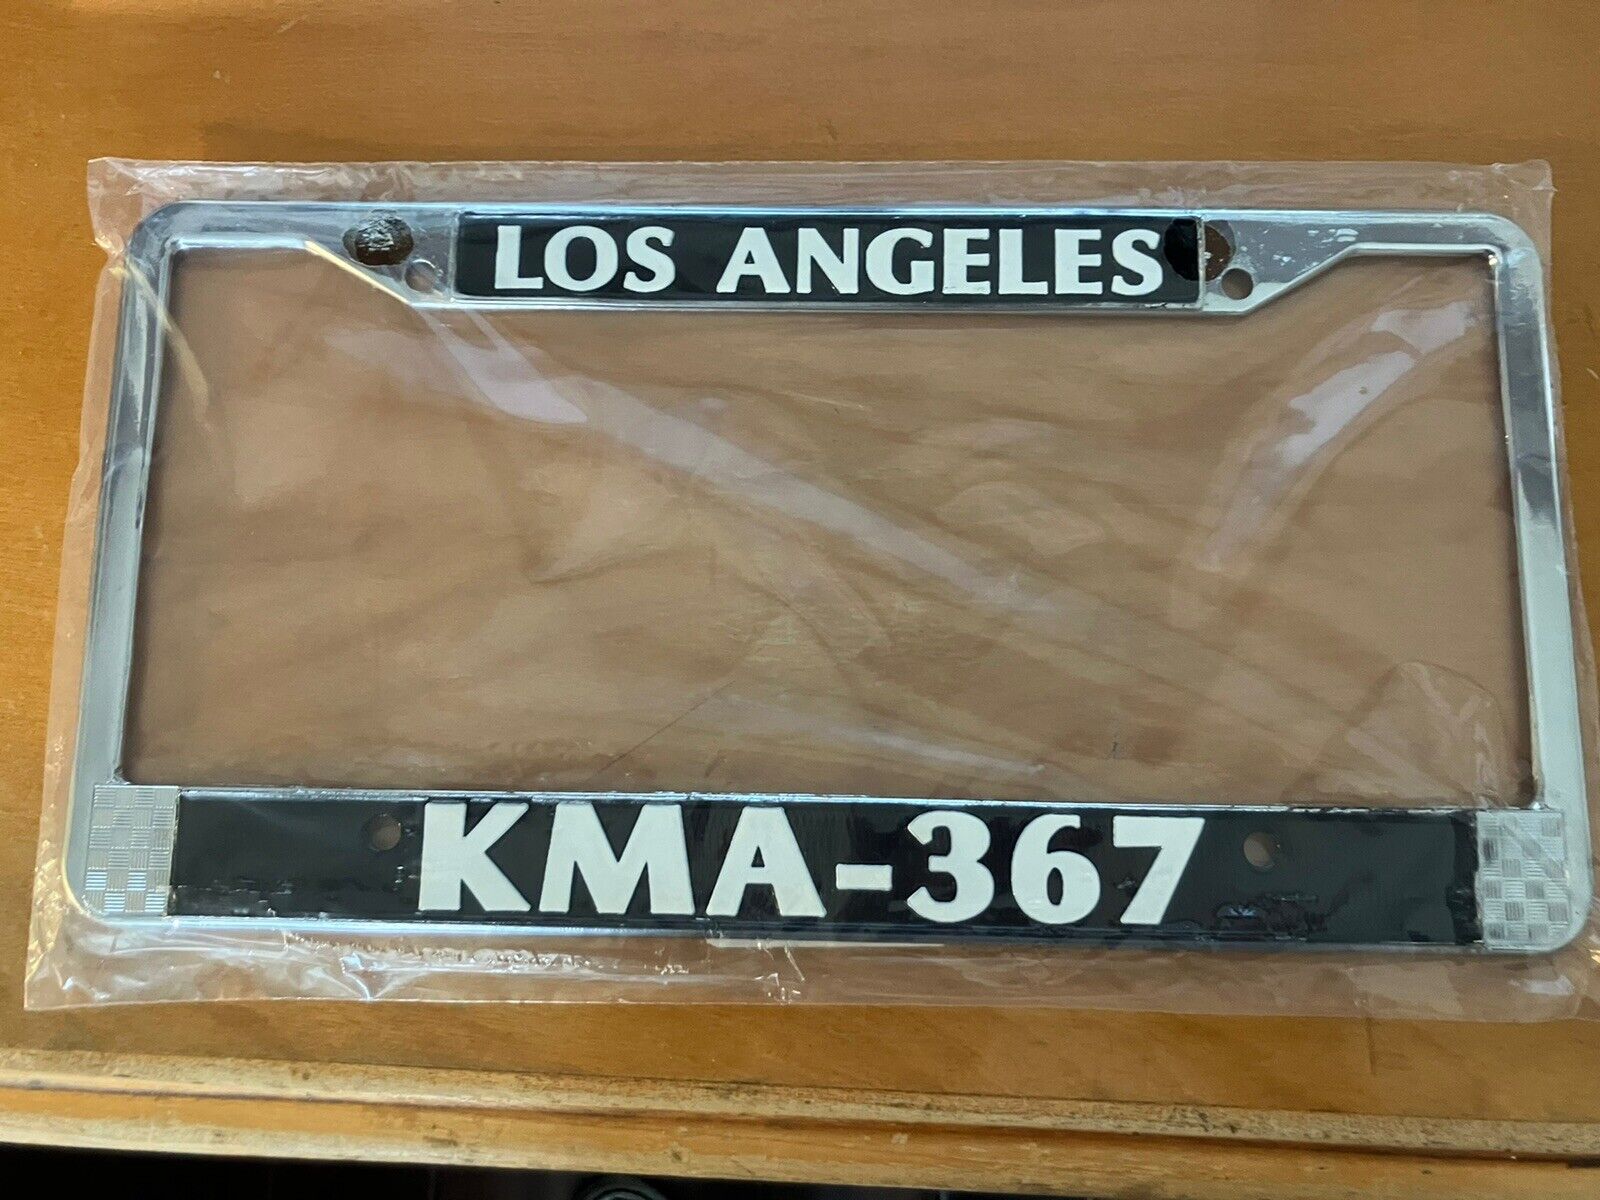 NEW LAPD GENUINE POLICE KMA-367 CHROME METAL LICENSE PLATE FRAME  CHP 11-99 NEW